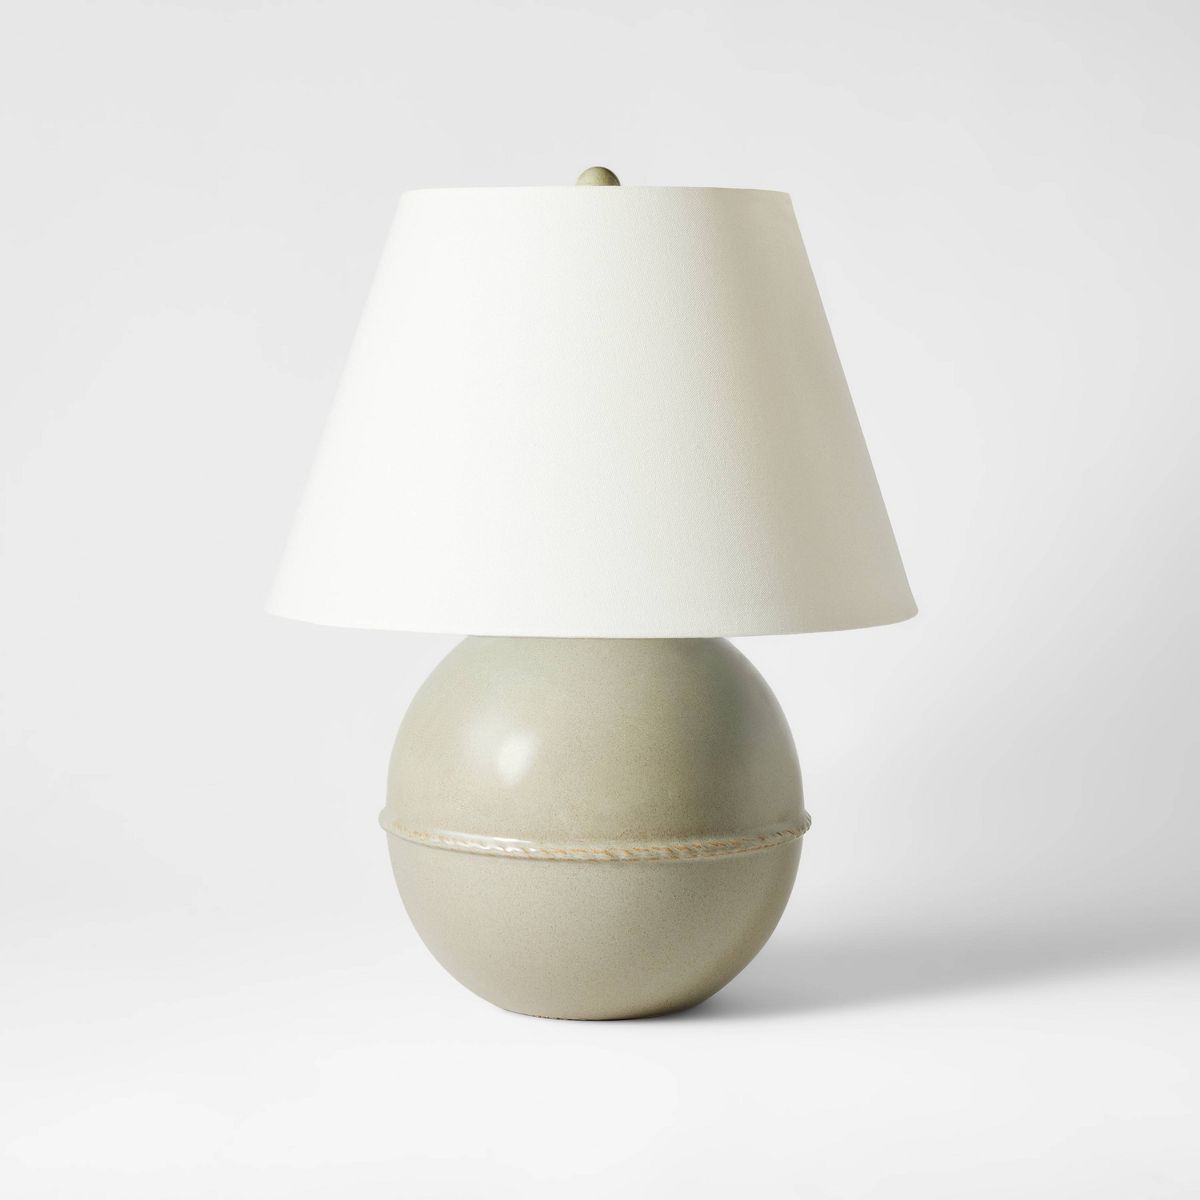 Medium Ceramic Table Lamp Green - Threshold™ designed with Studio McGee | Target